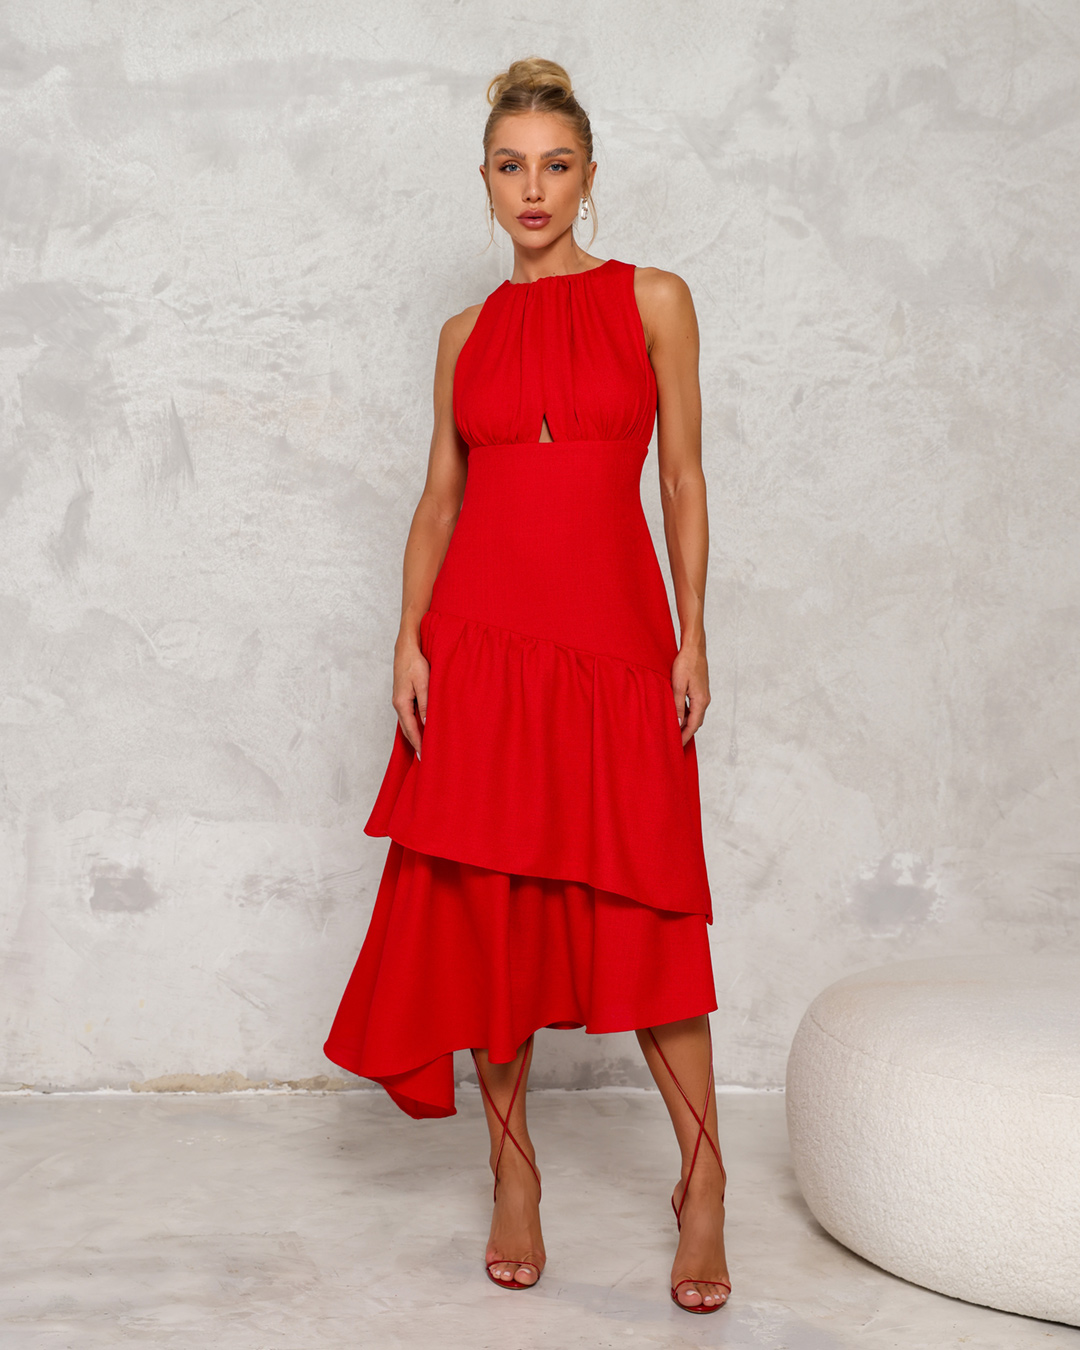 Dot Clothing - Dress Dot Clothing Midi Red - 2225VERMELHO